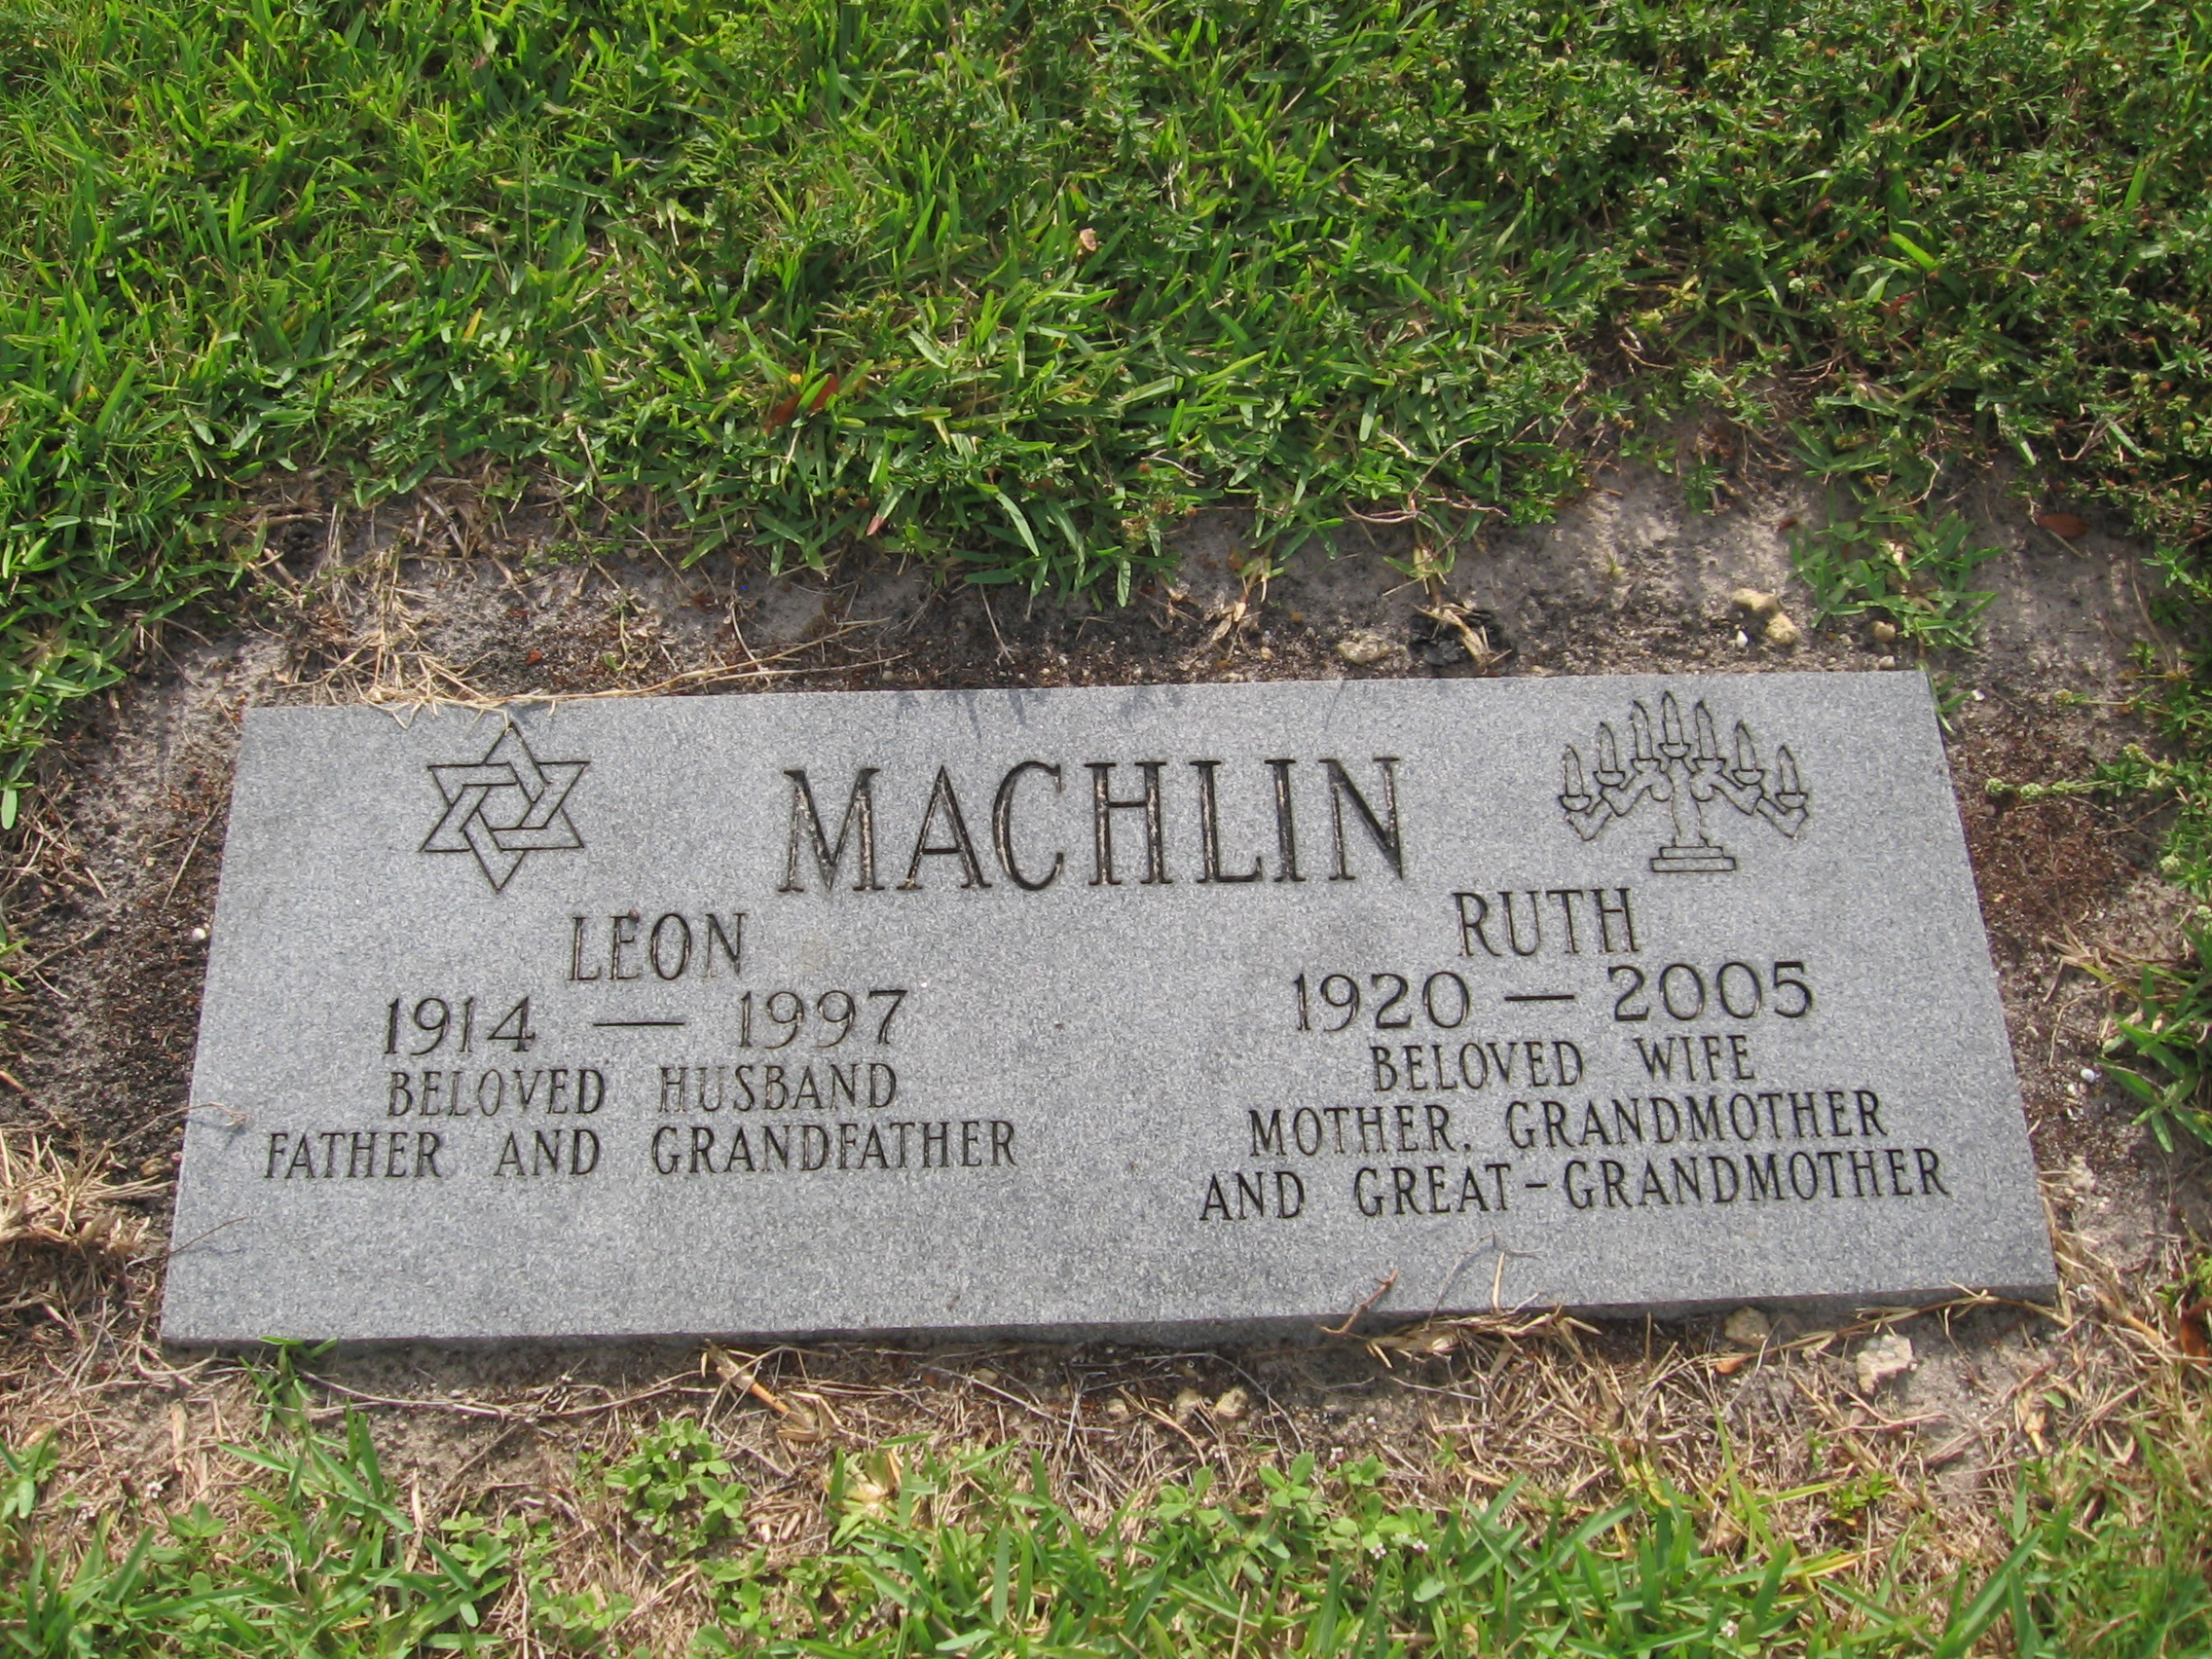 Leon Machlin